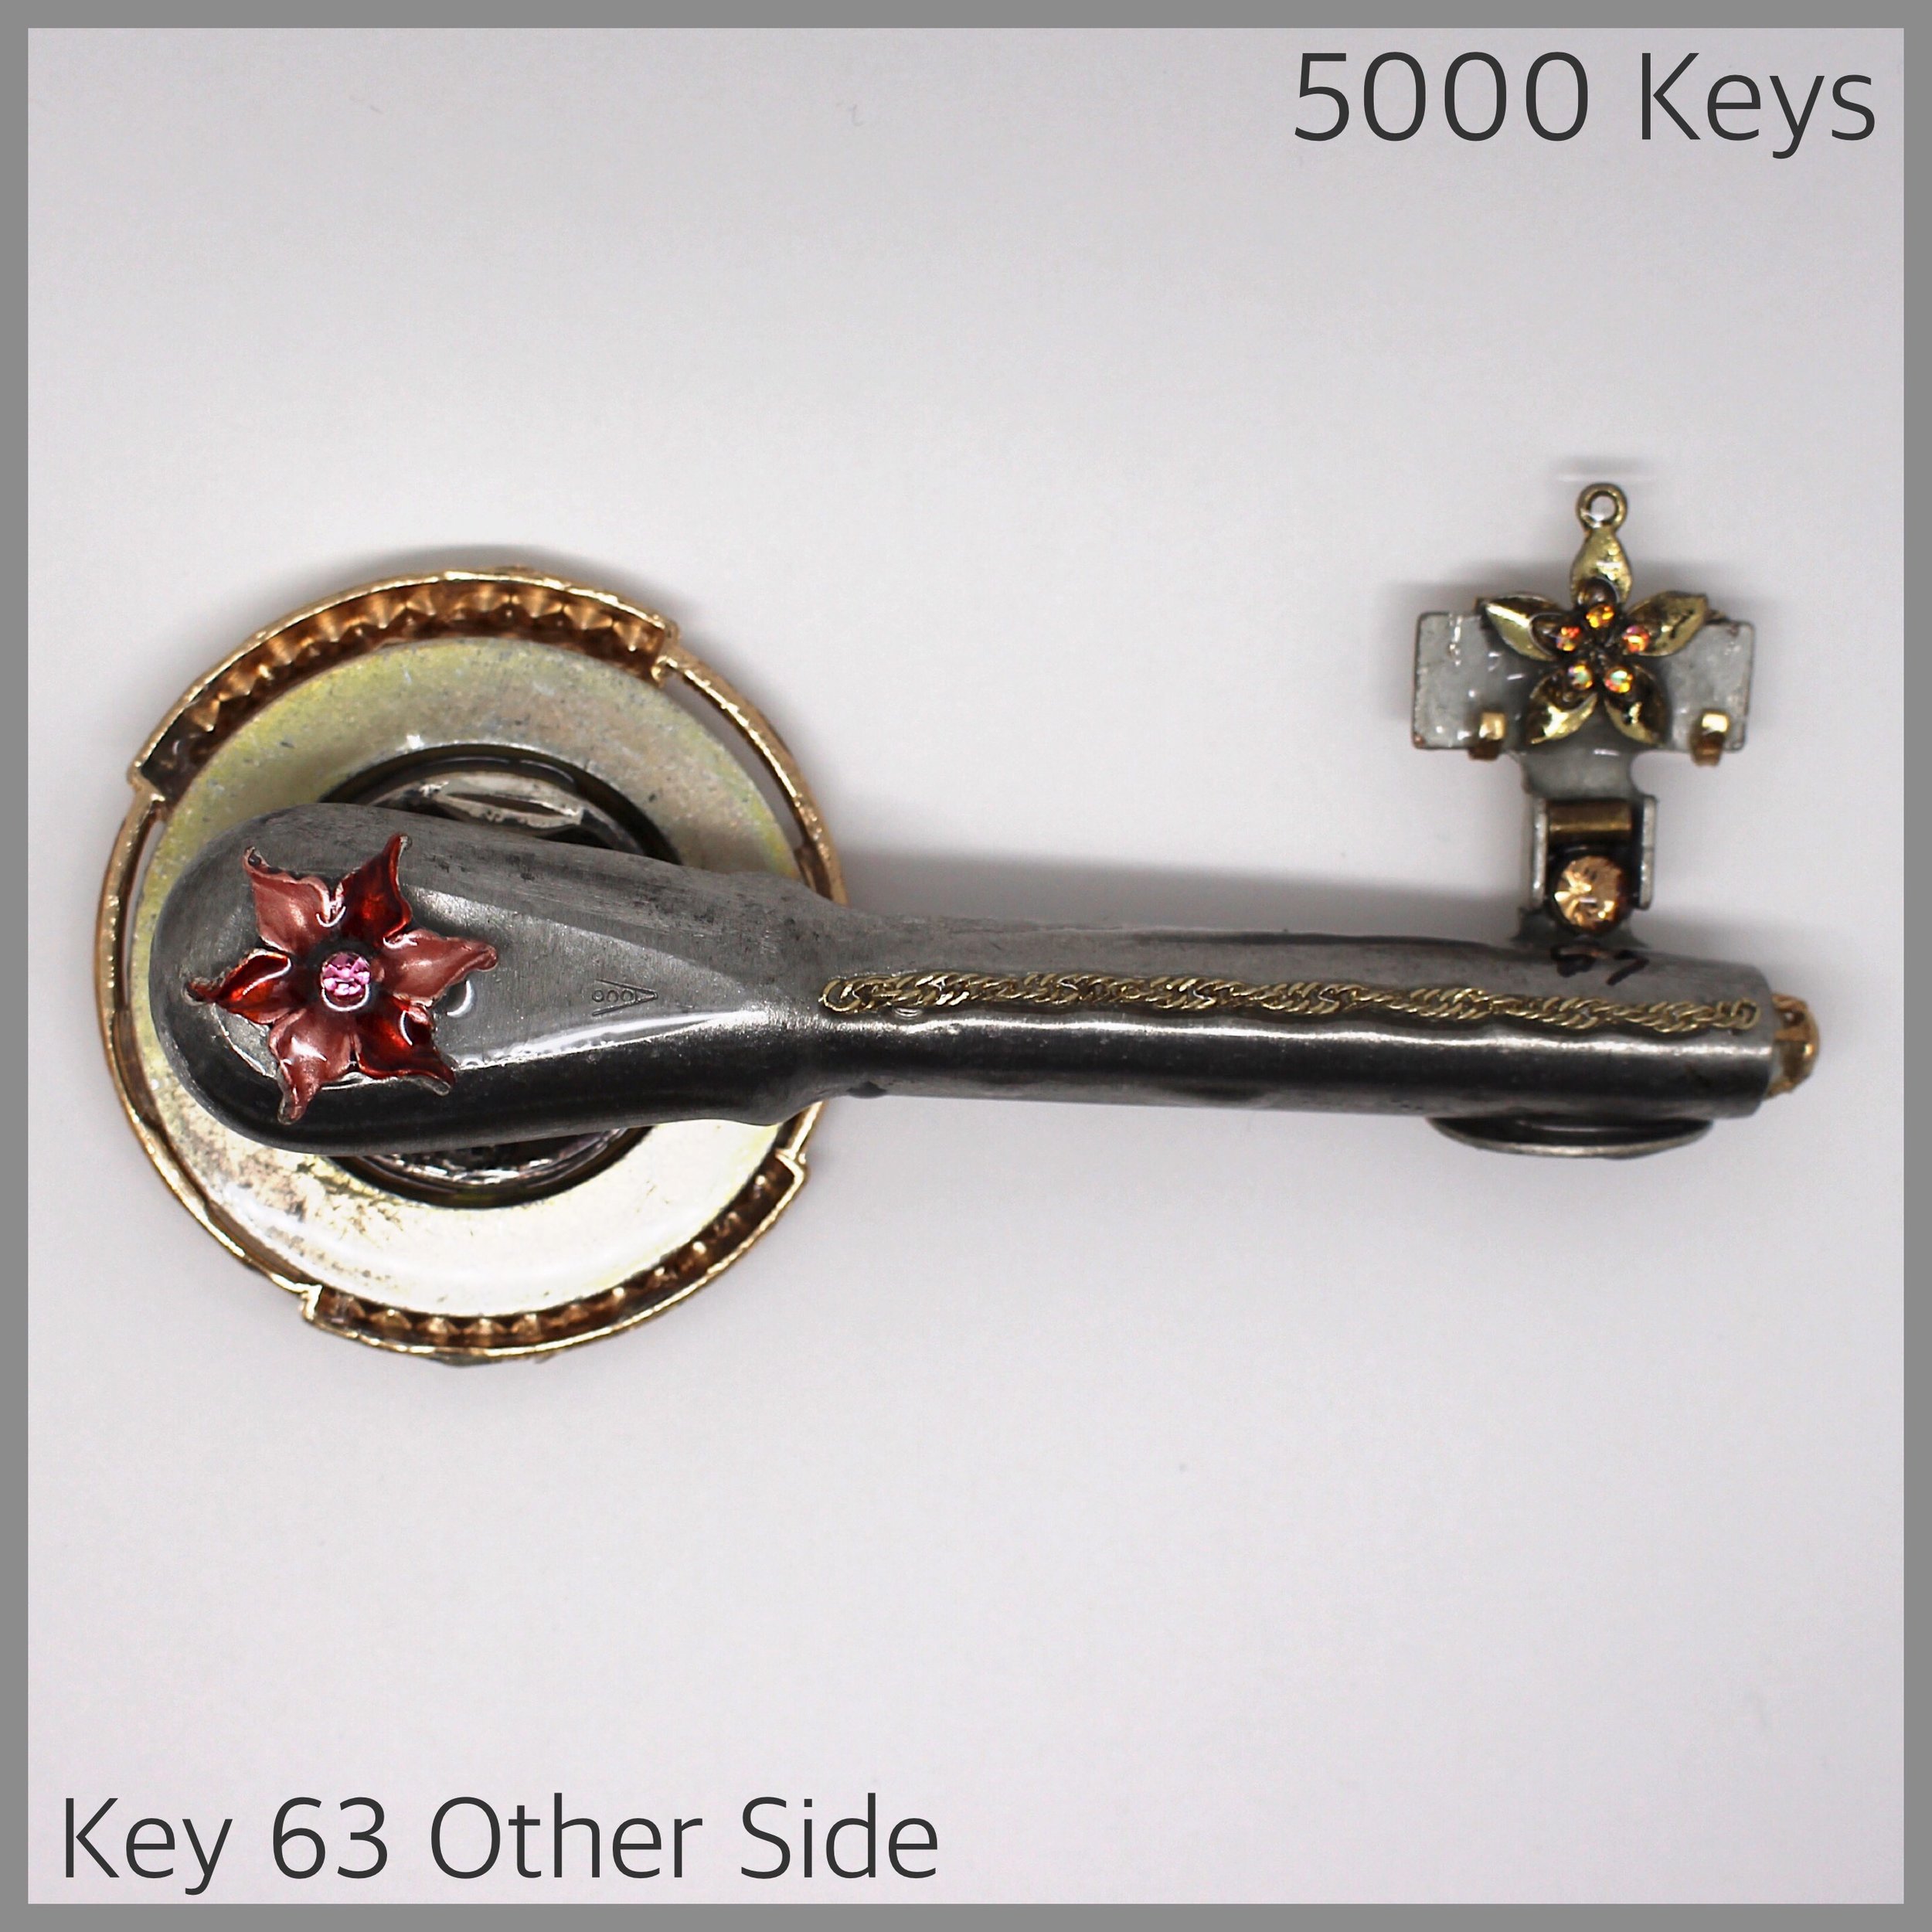 Key 63 other side - 1.JPG